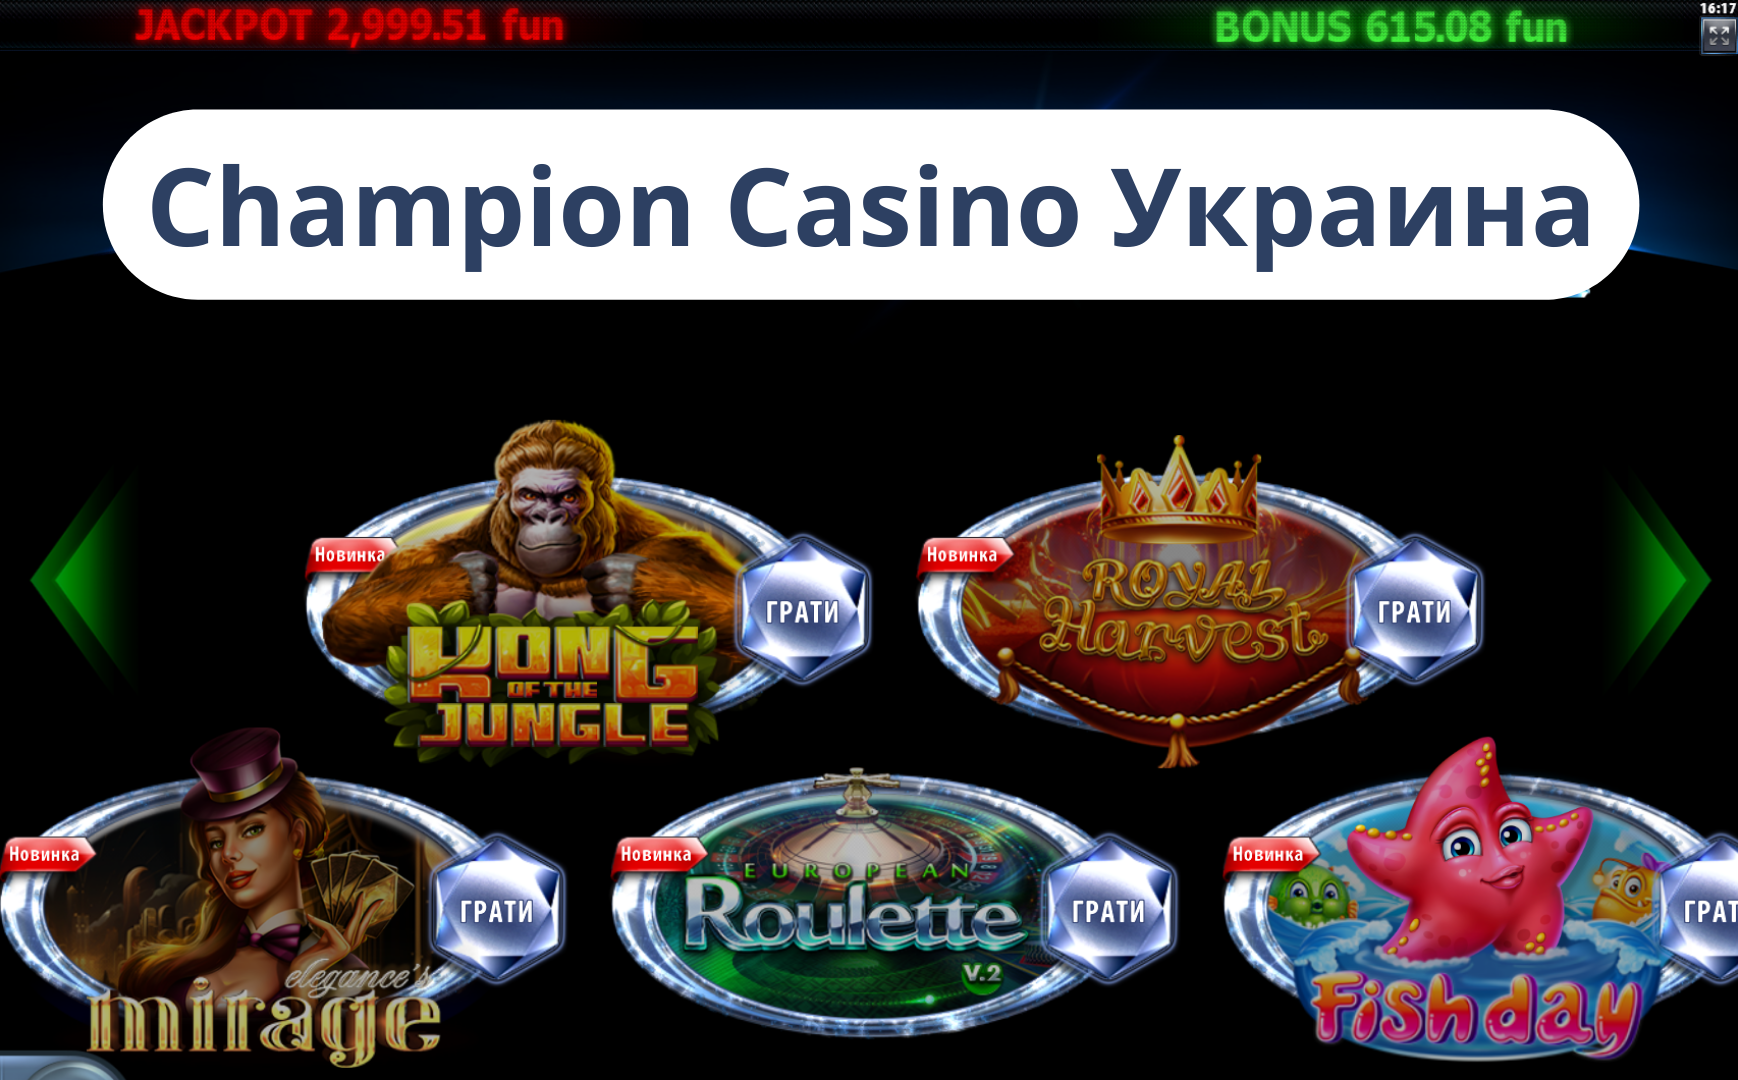 Украинское онлайн казино Champion